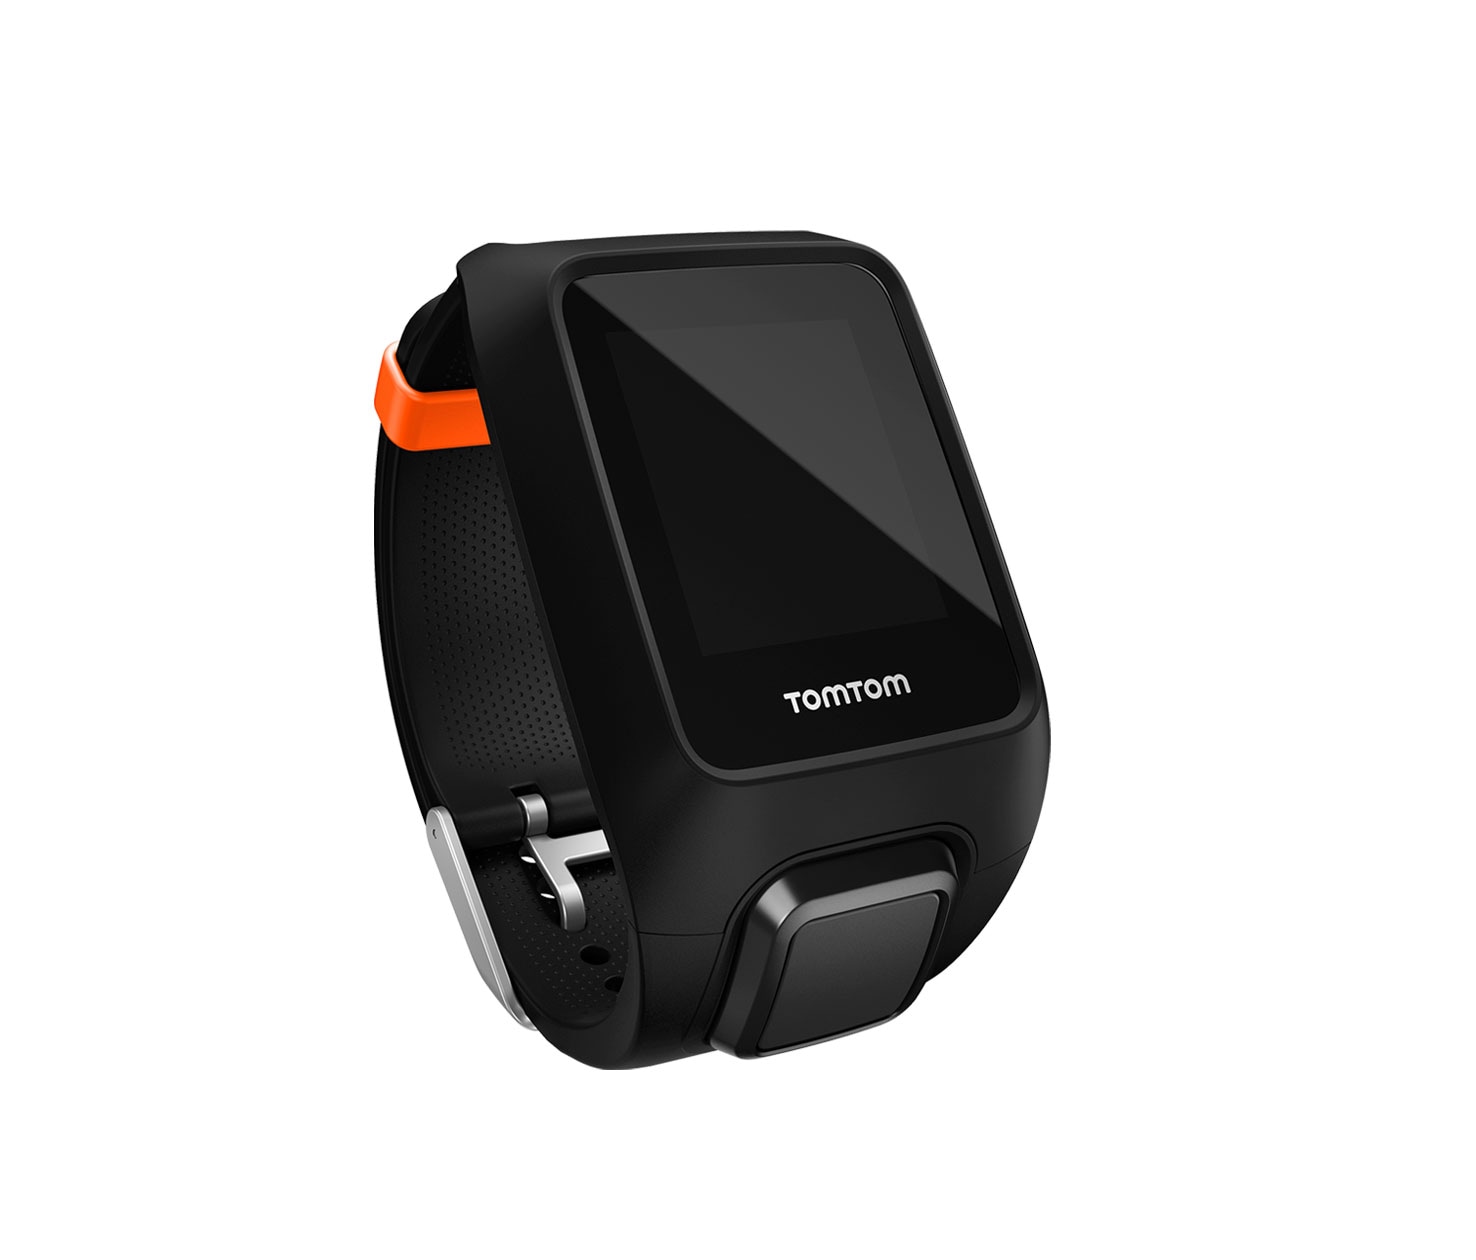 Bracelet de montre TomTom Multi-Sport (noir/orange)